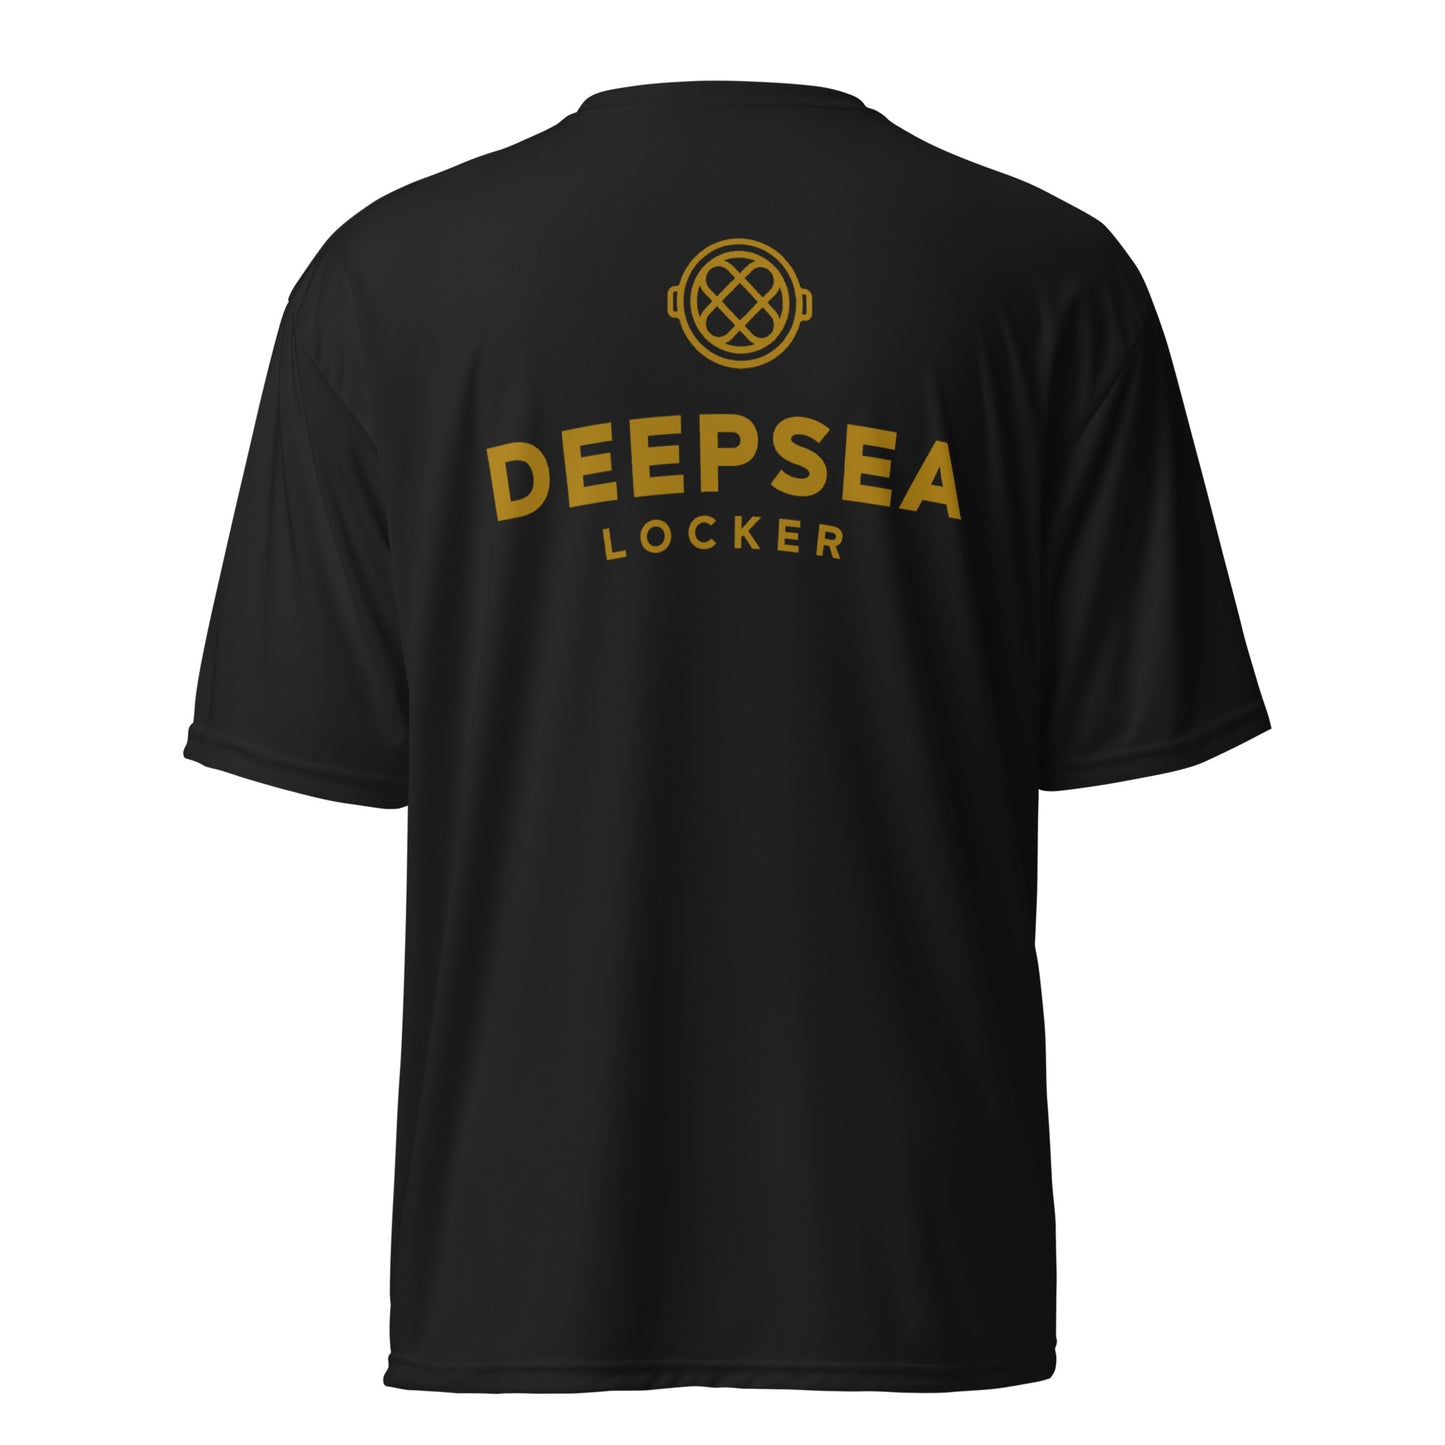 DEEPEA Locker / Made Under Pressure crew neck t-shirt